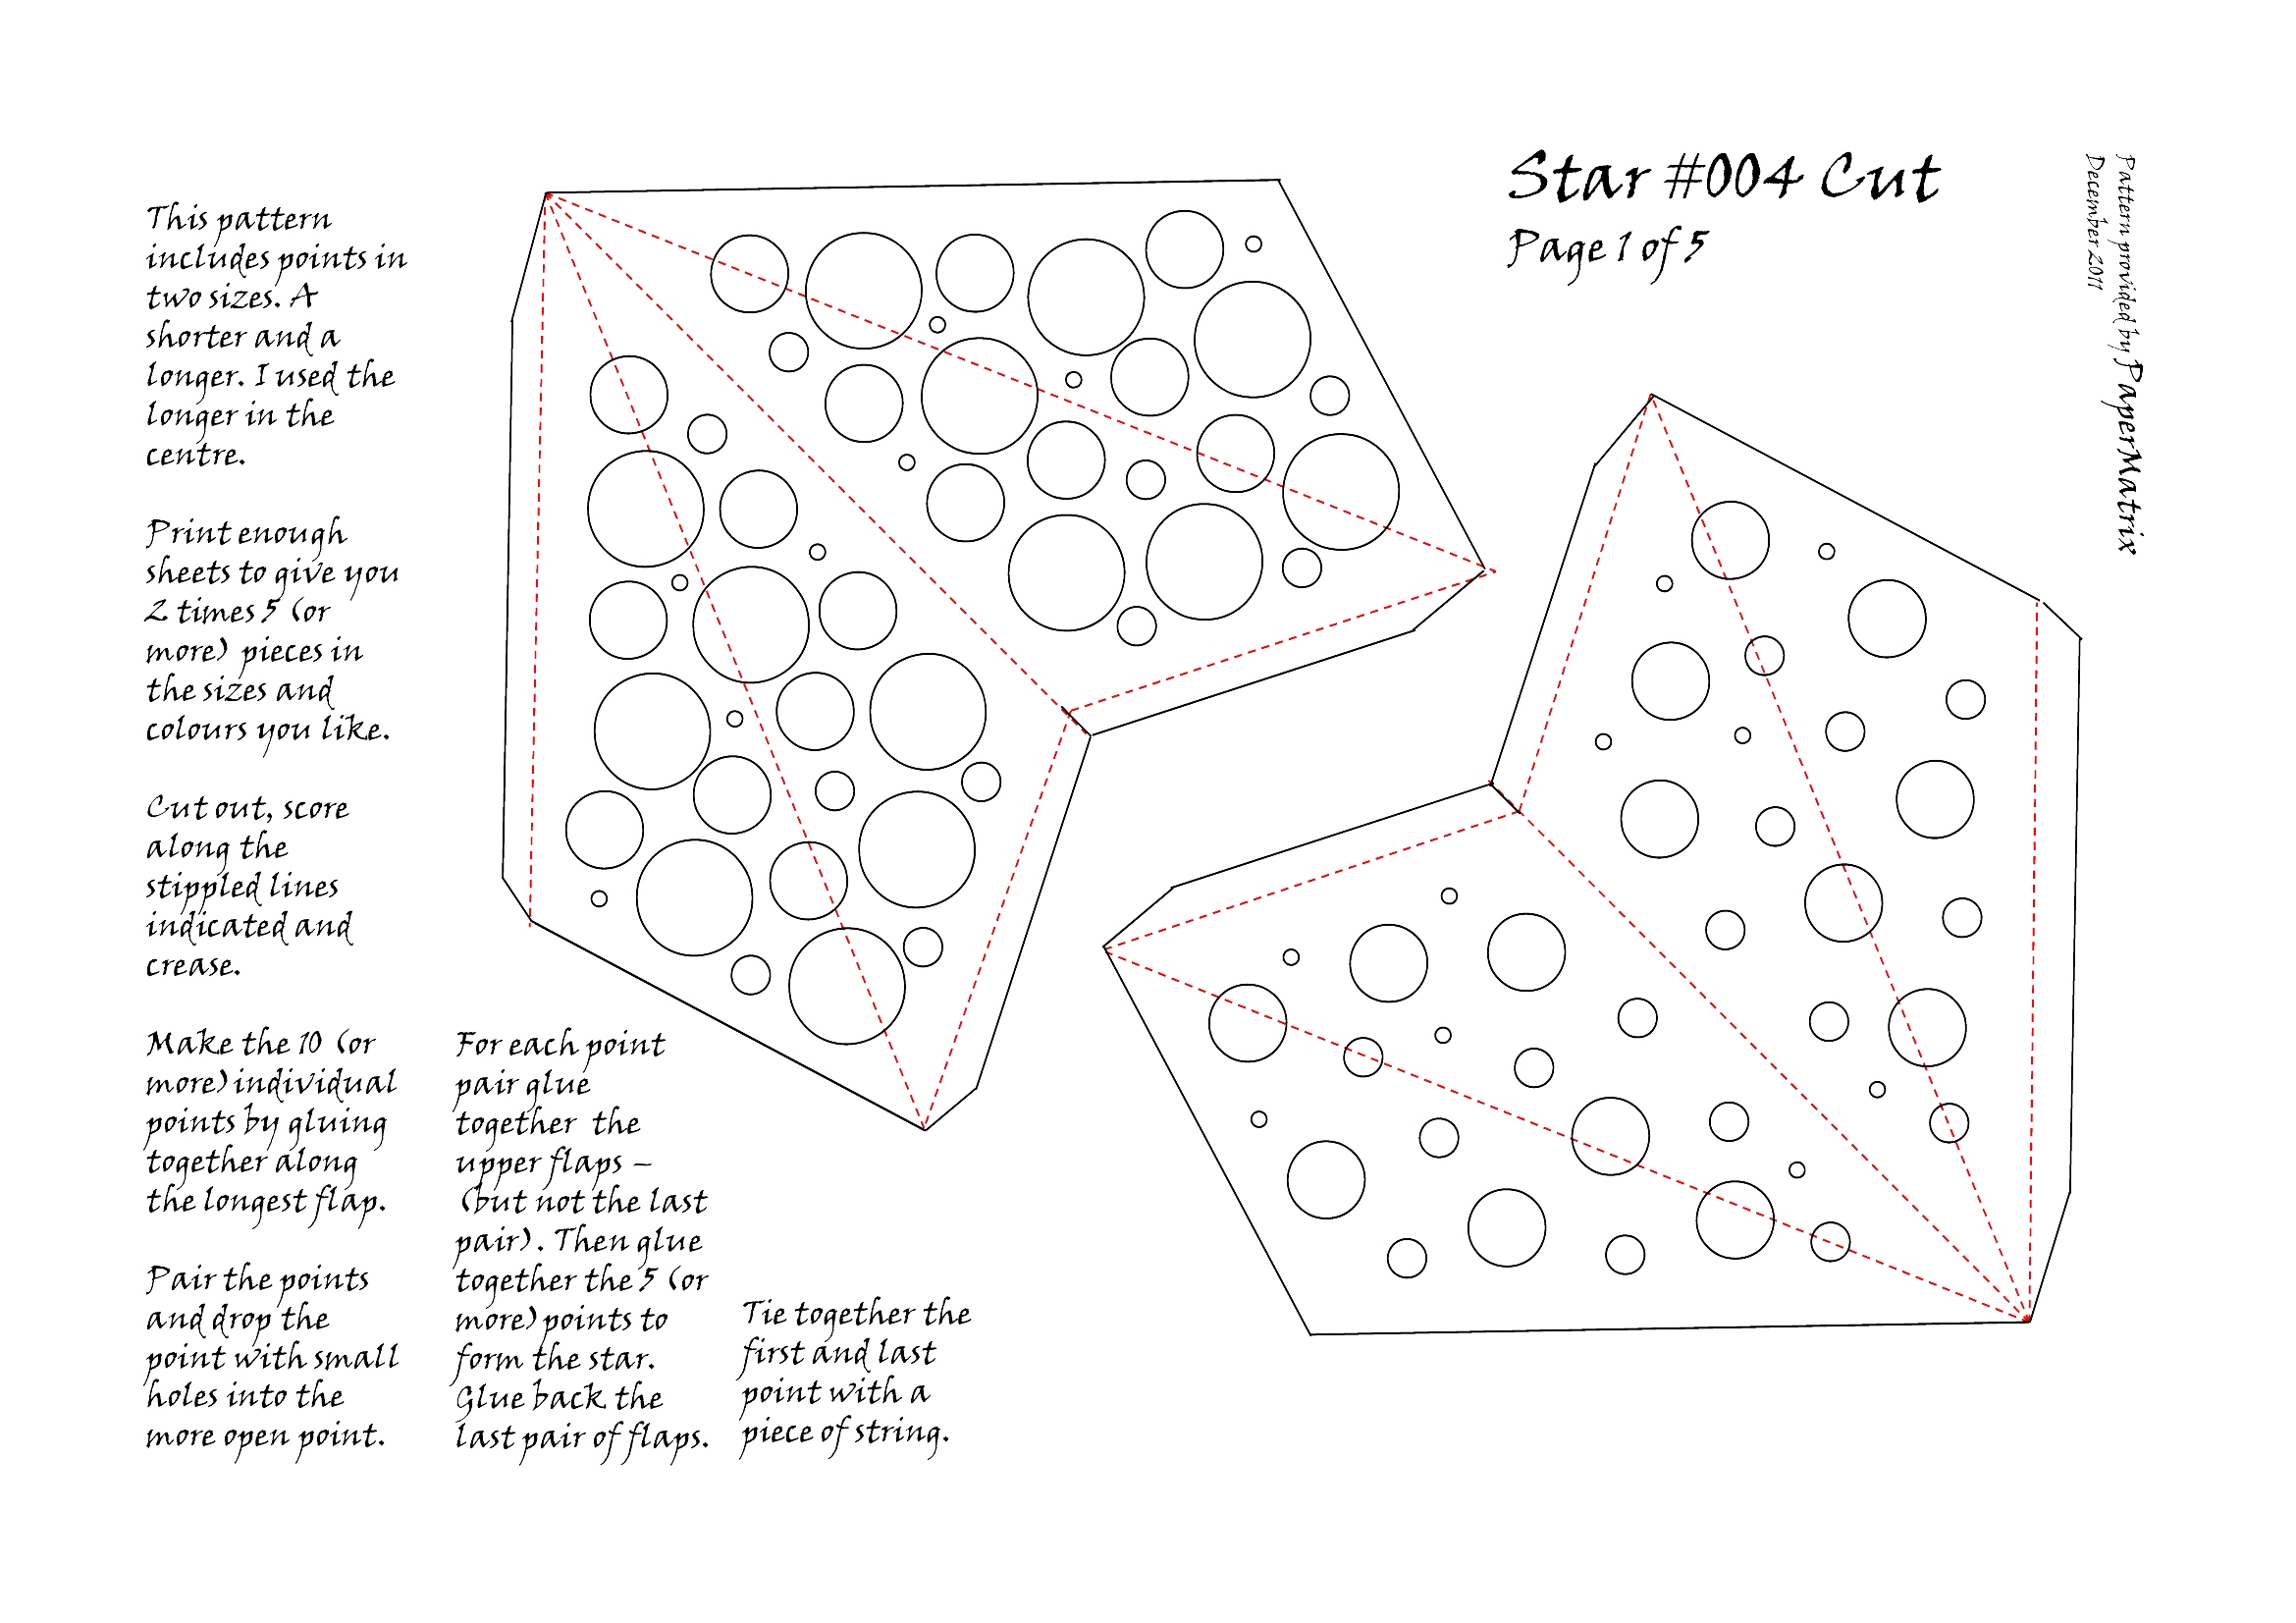 Allon 4 из паттерна. Pattern 4 points. Round Star Cut diagram. Last pair